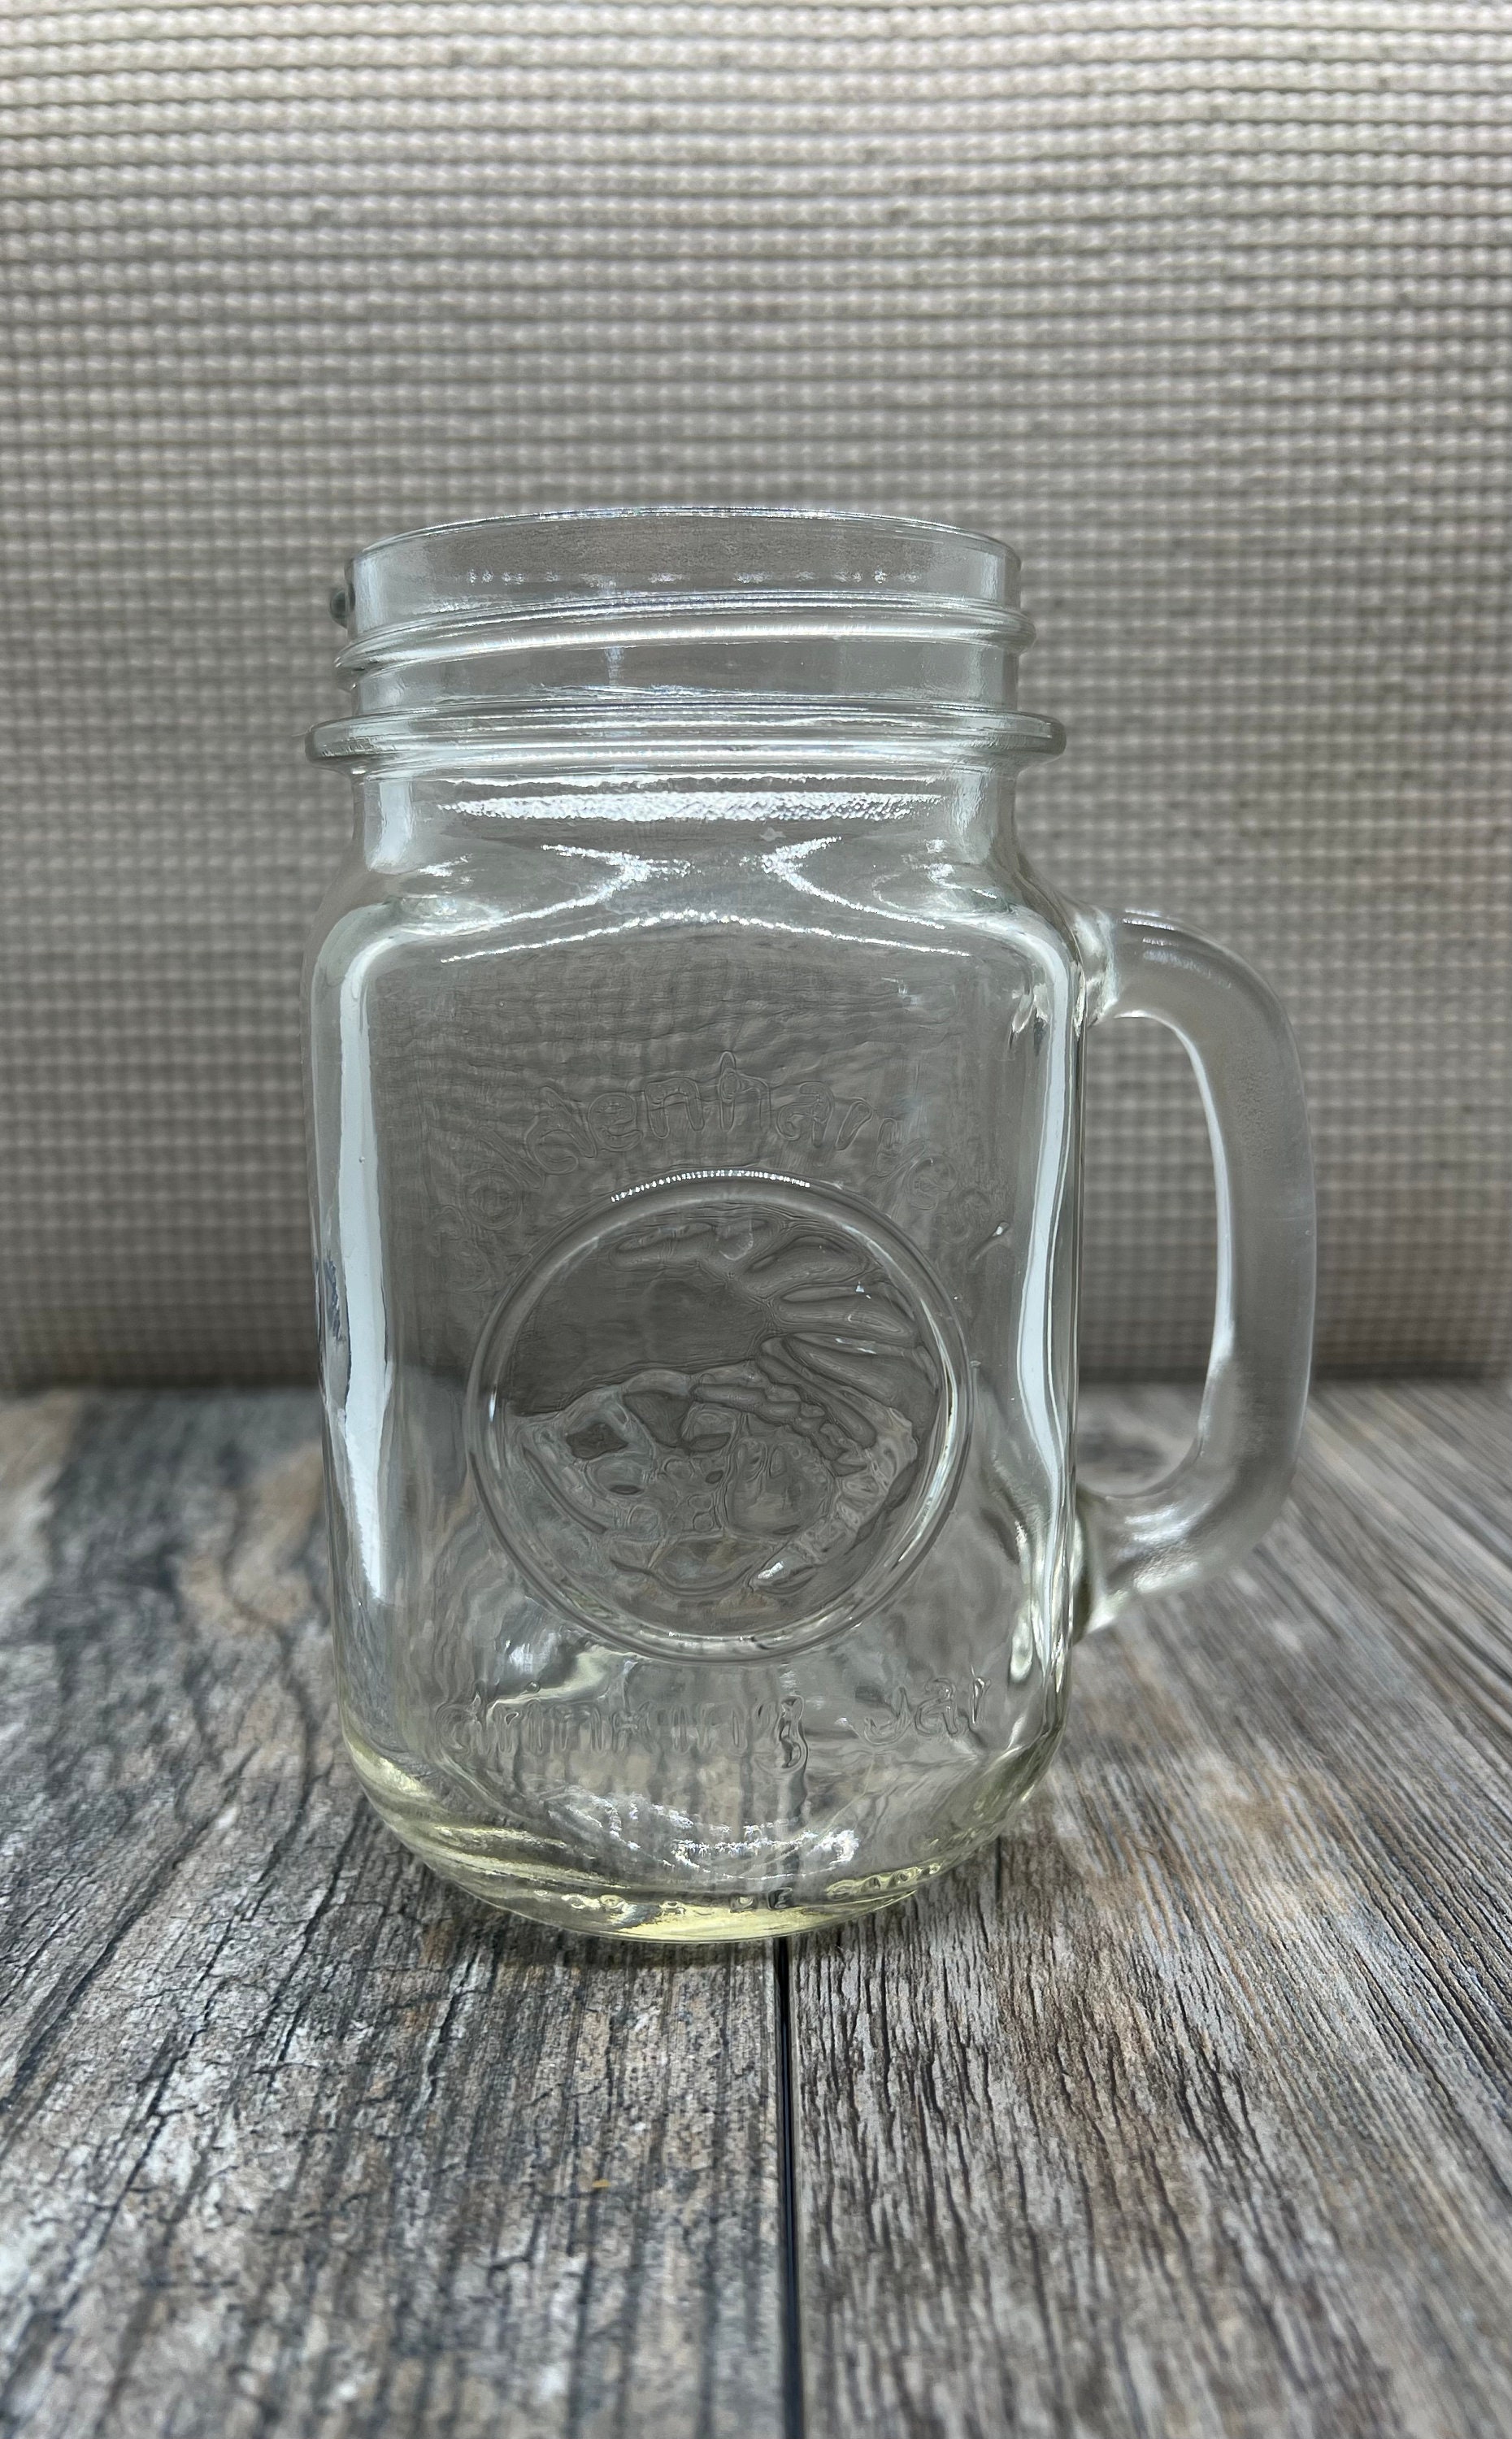  Glass Pitcher with Lid – 1 Quart Mason Jar Pitcher